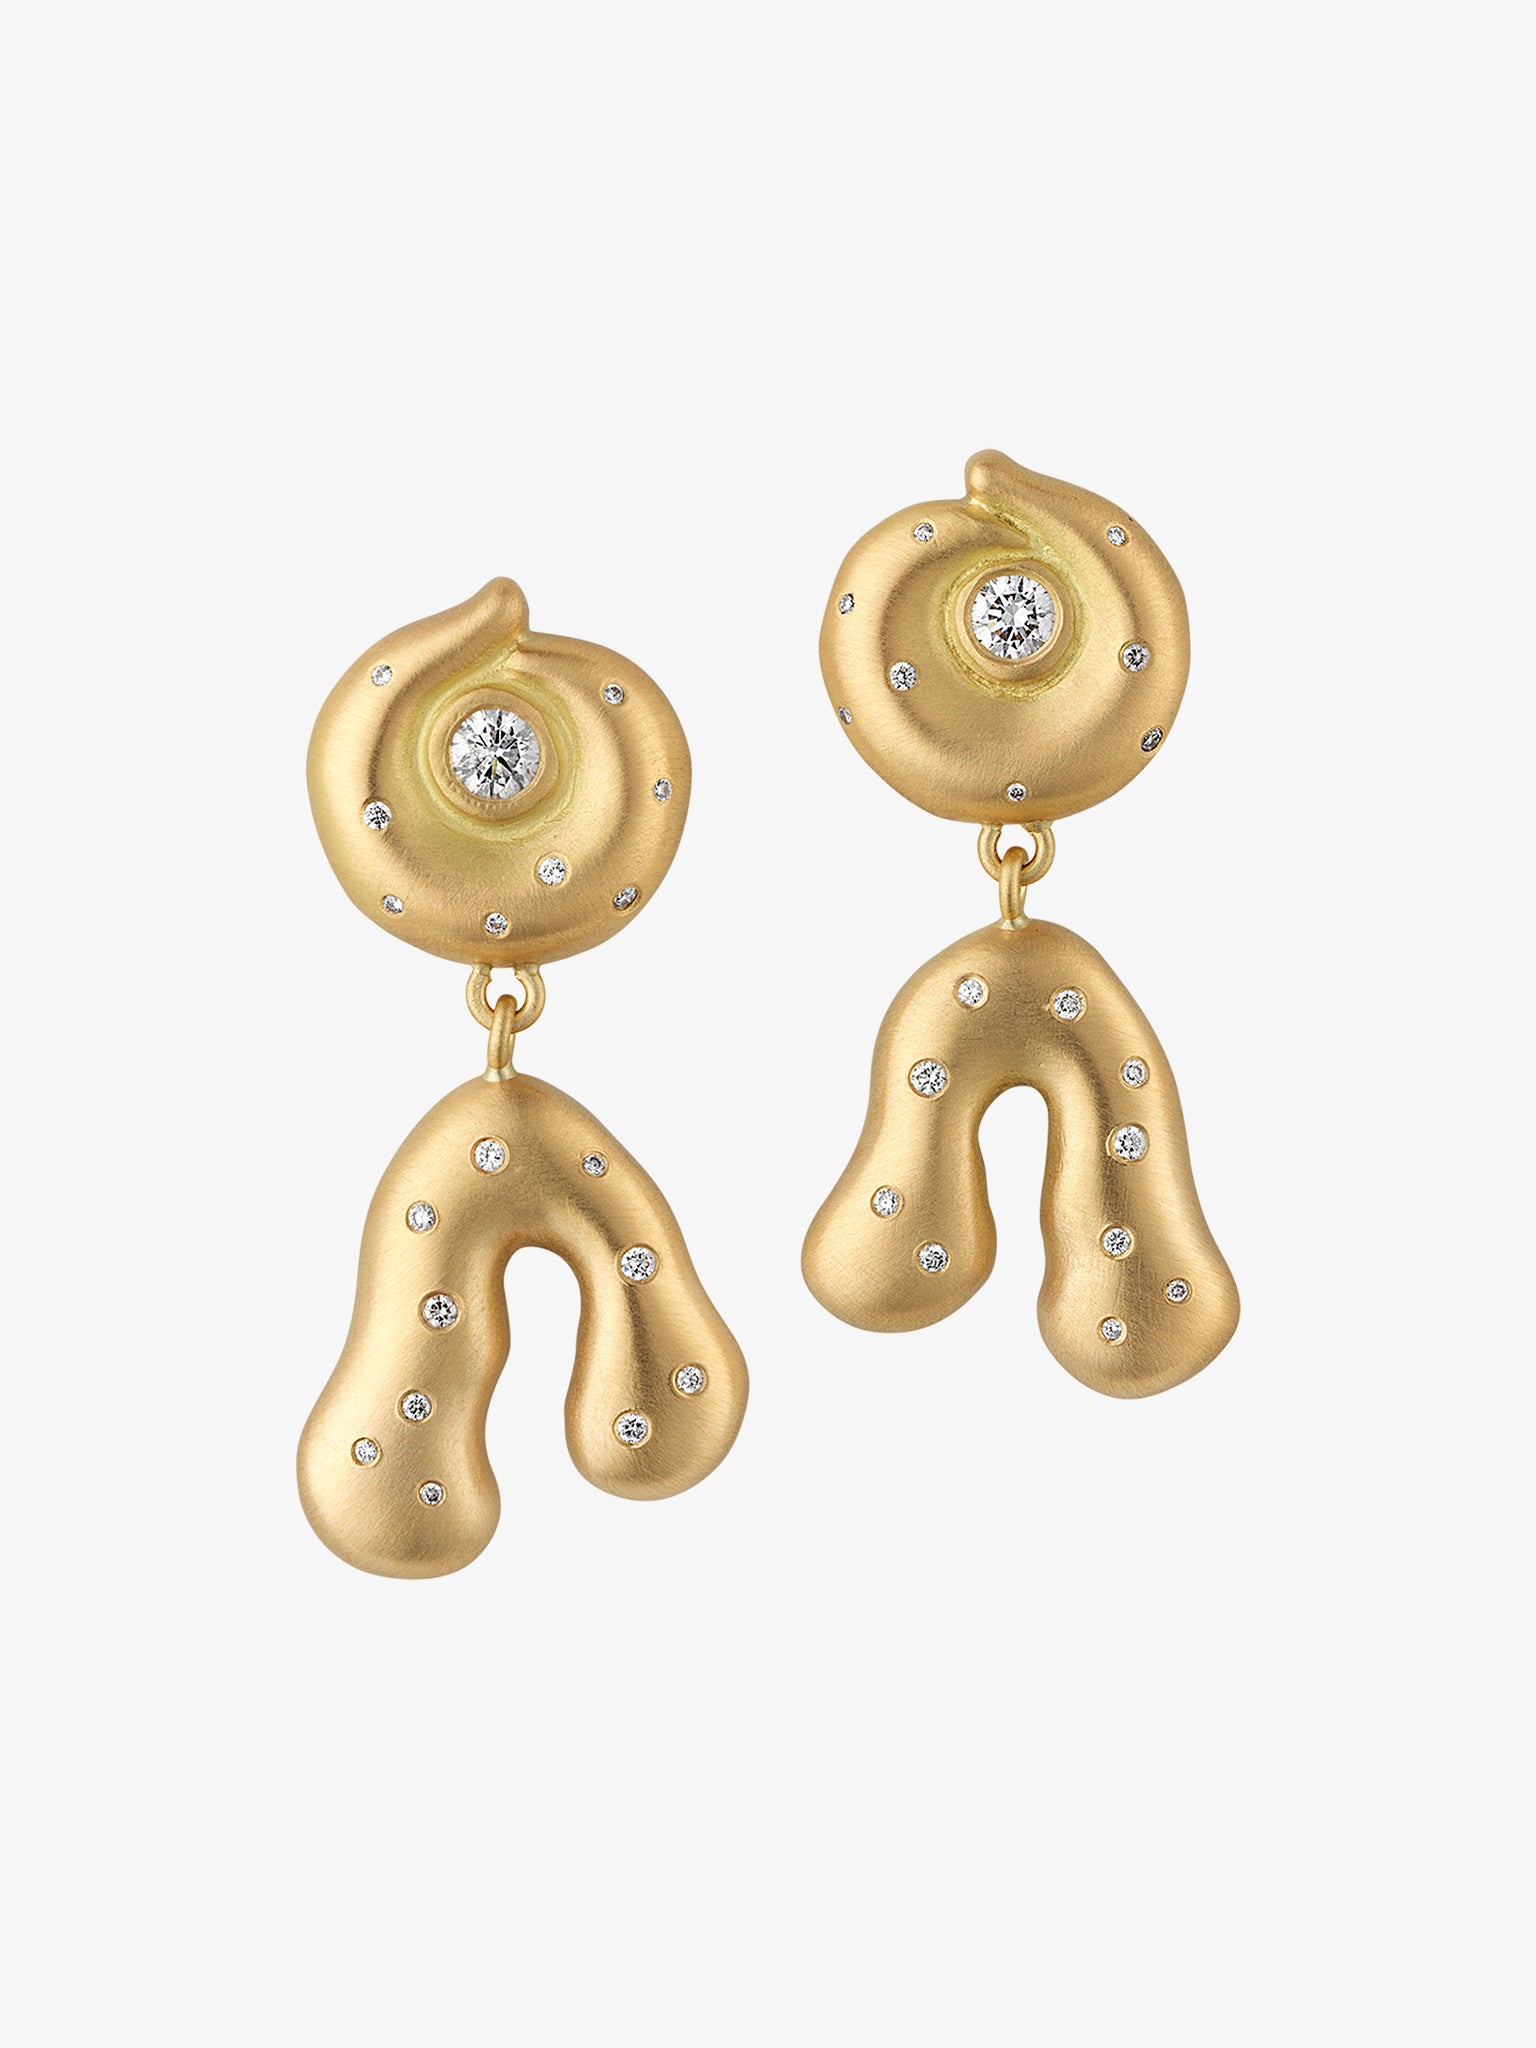 Helix diamond earrings